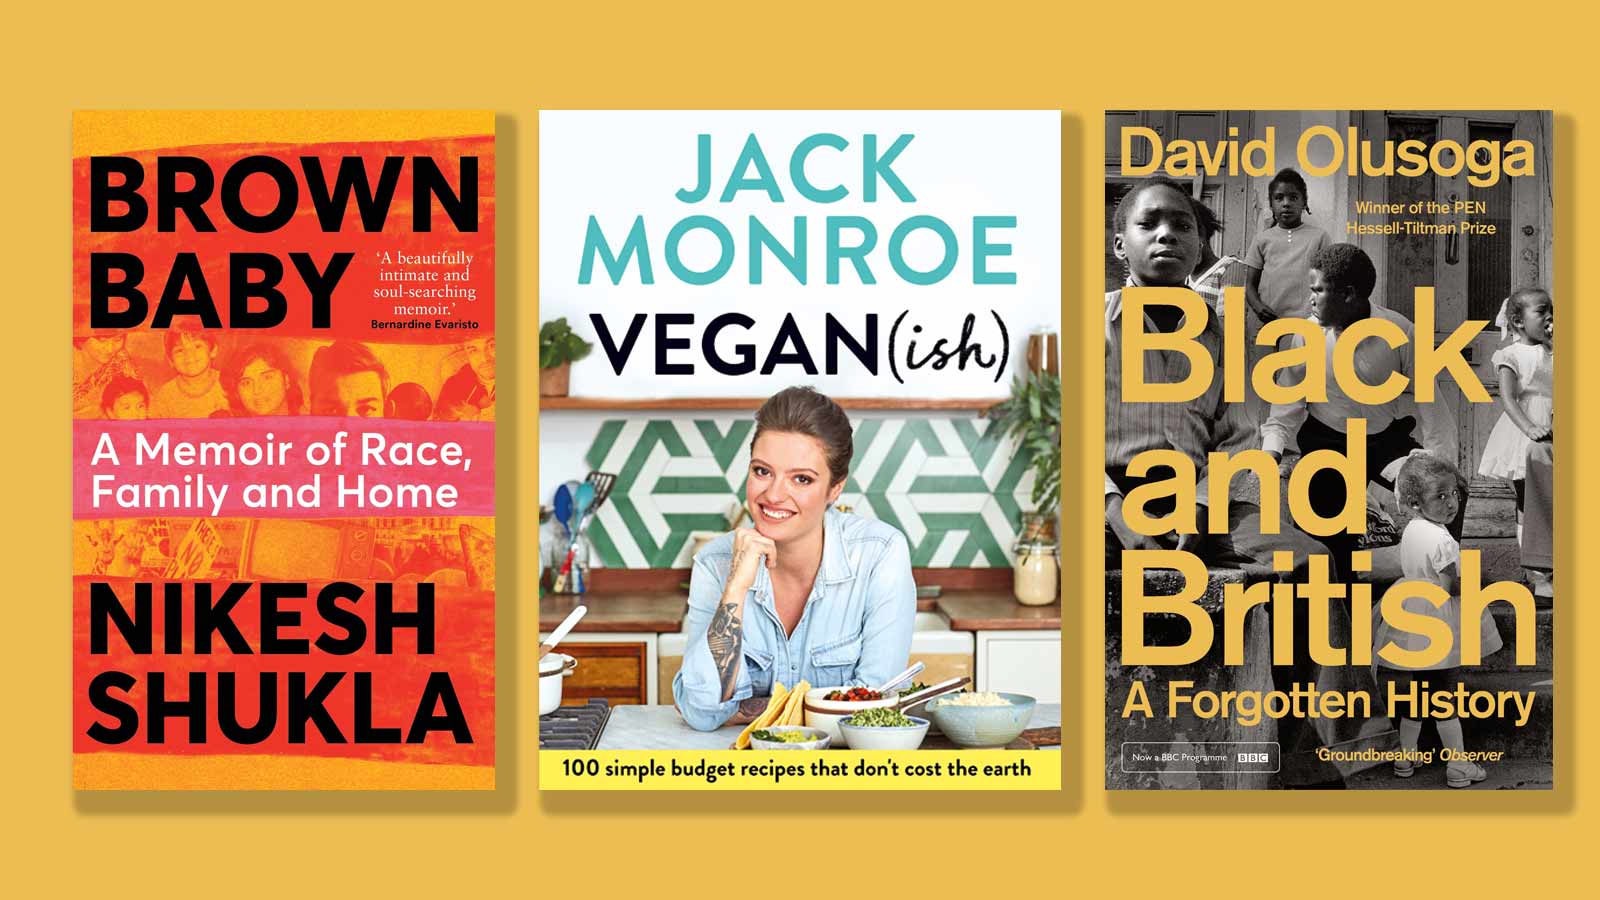 Brown Baby, Vegan(ish) and Black and British book covers